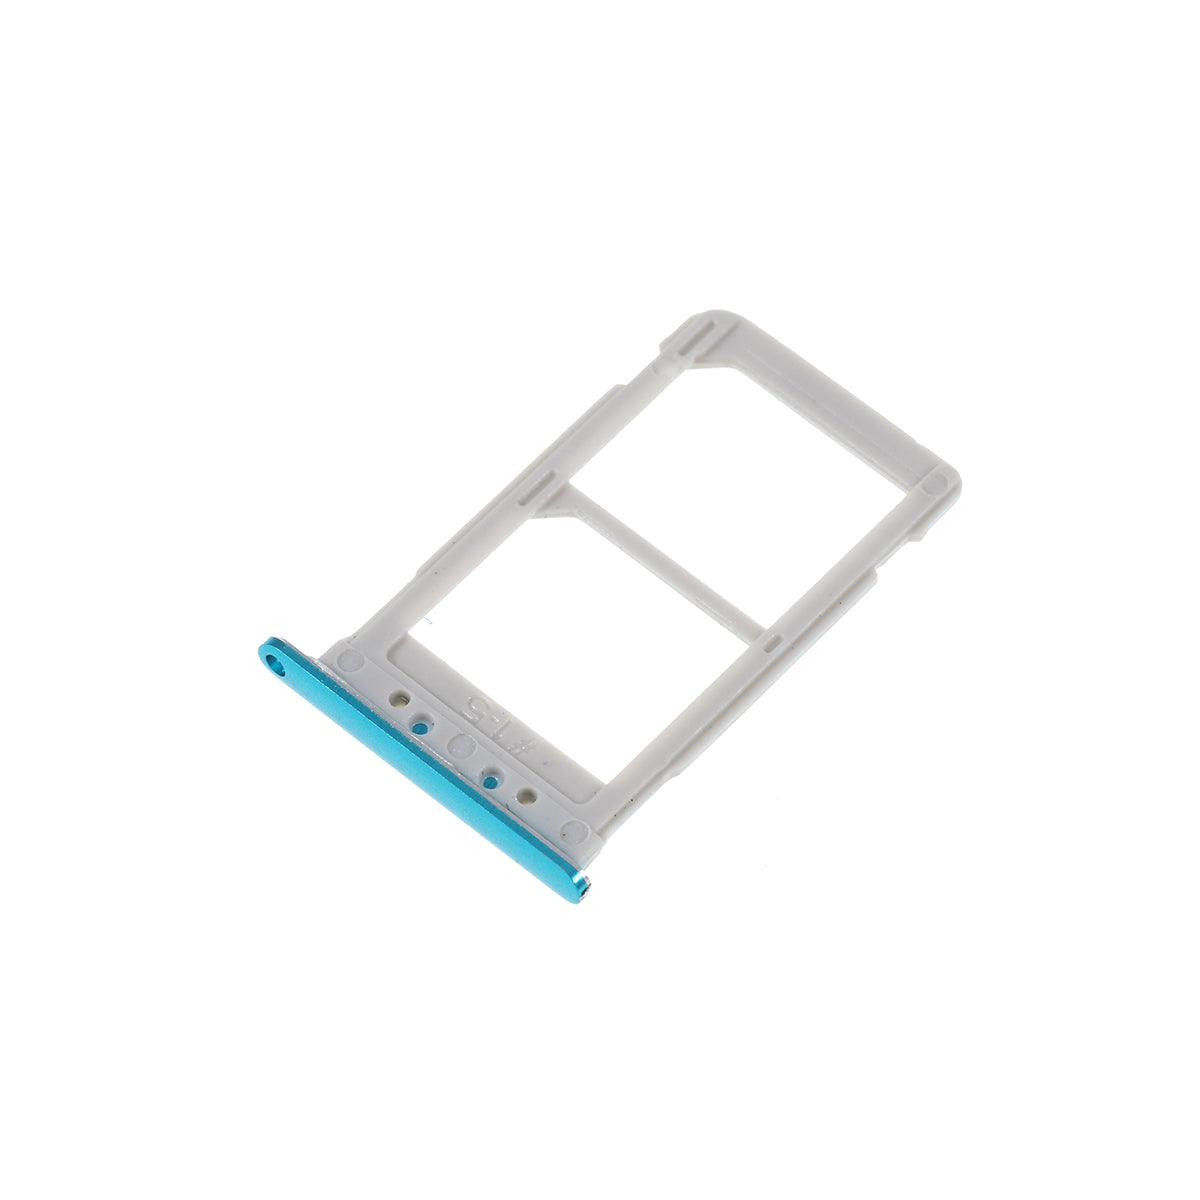 OEM Dual SIM Card Tray Holder Replace Part for Samsung Galaxy A8S G8870 SM-G8870 SM-G887FZ G887FZ - Cyan